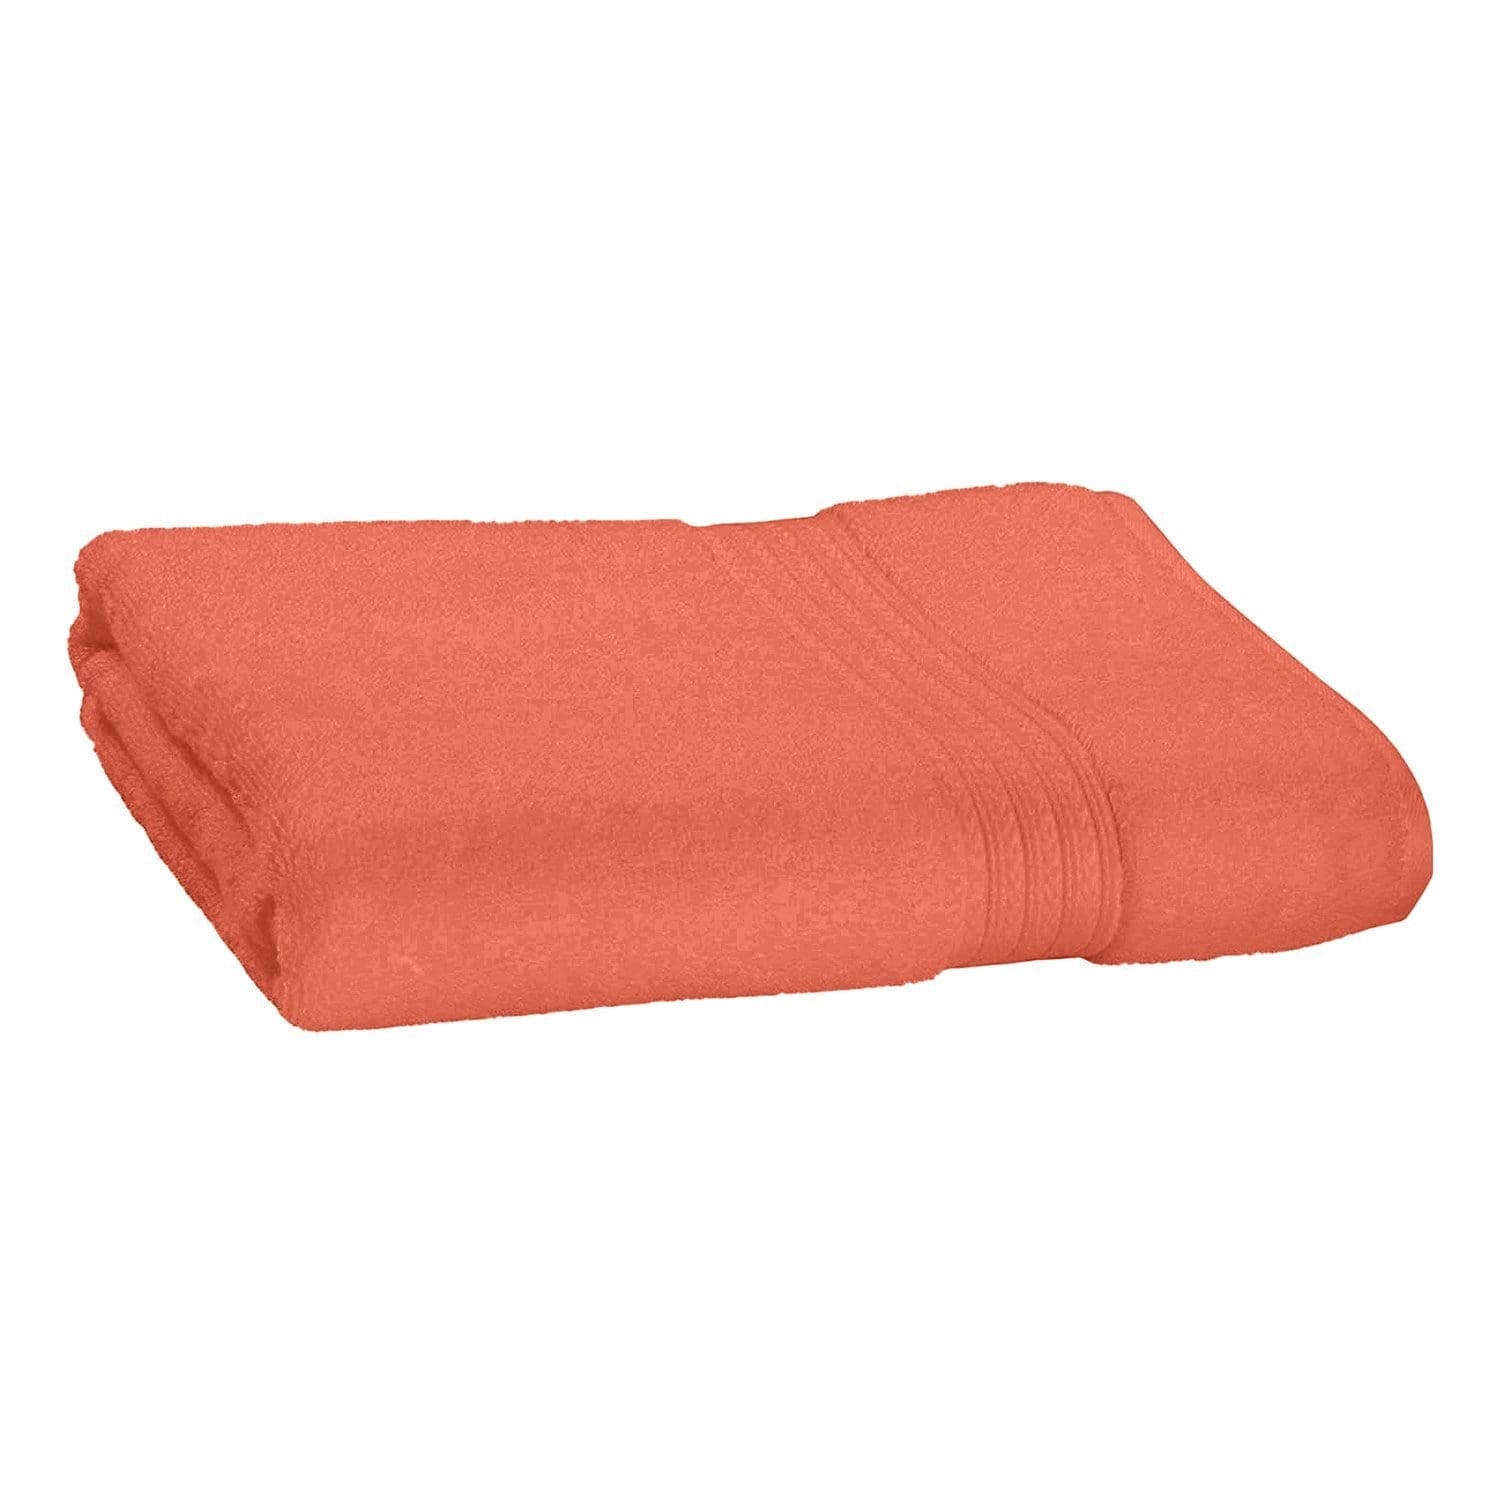 Kassatex Kassadesign Hand Towel - Blood Orange - KDK-110-BDO - Jashanmal Home